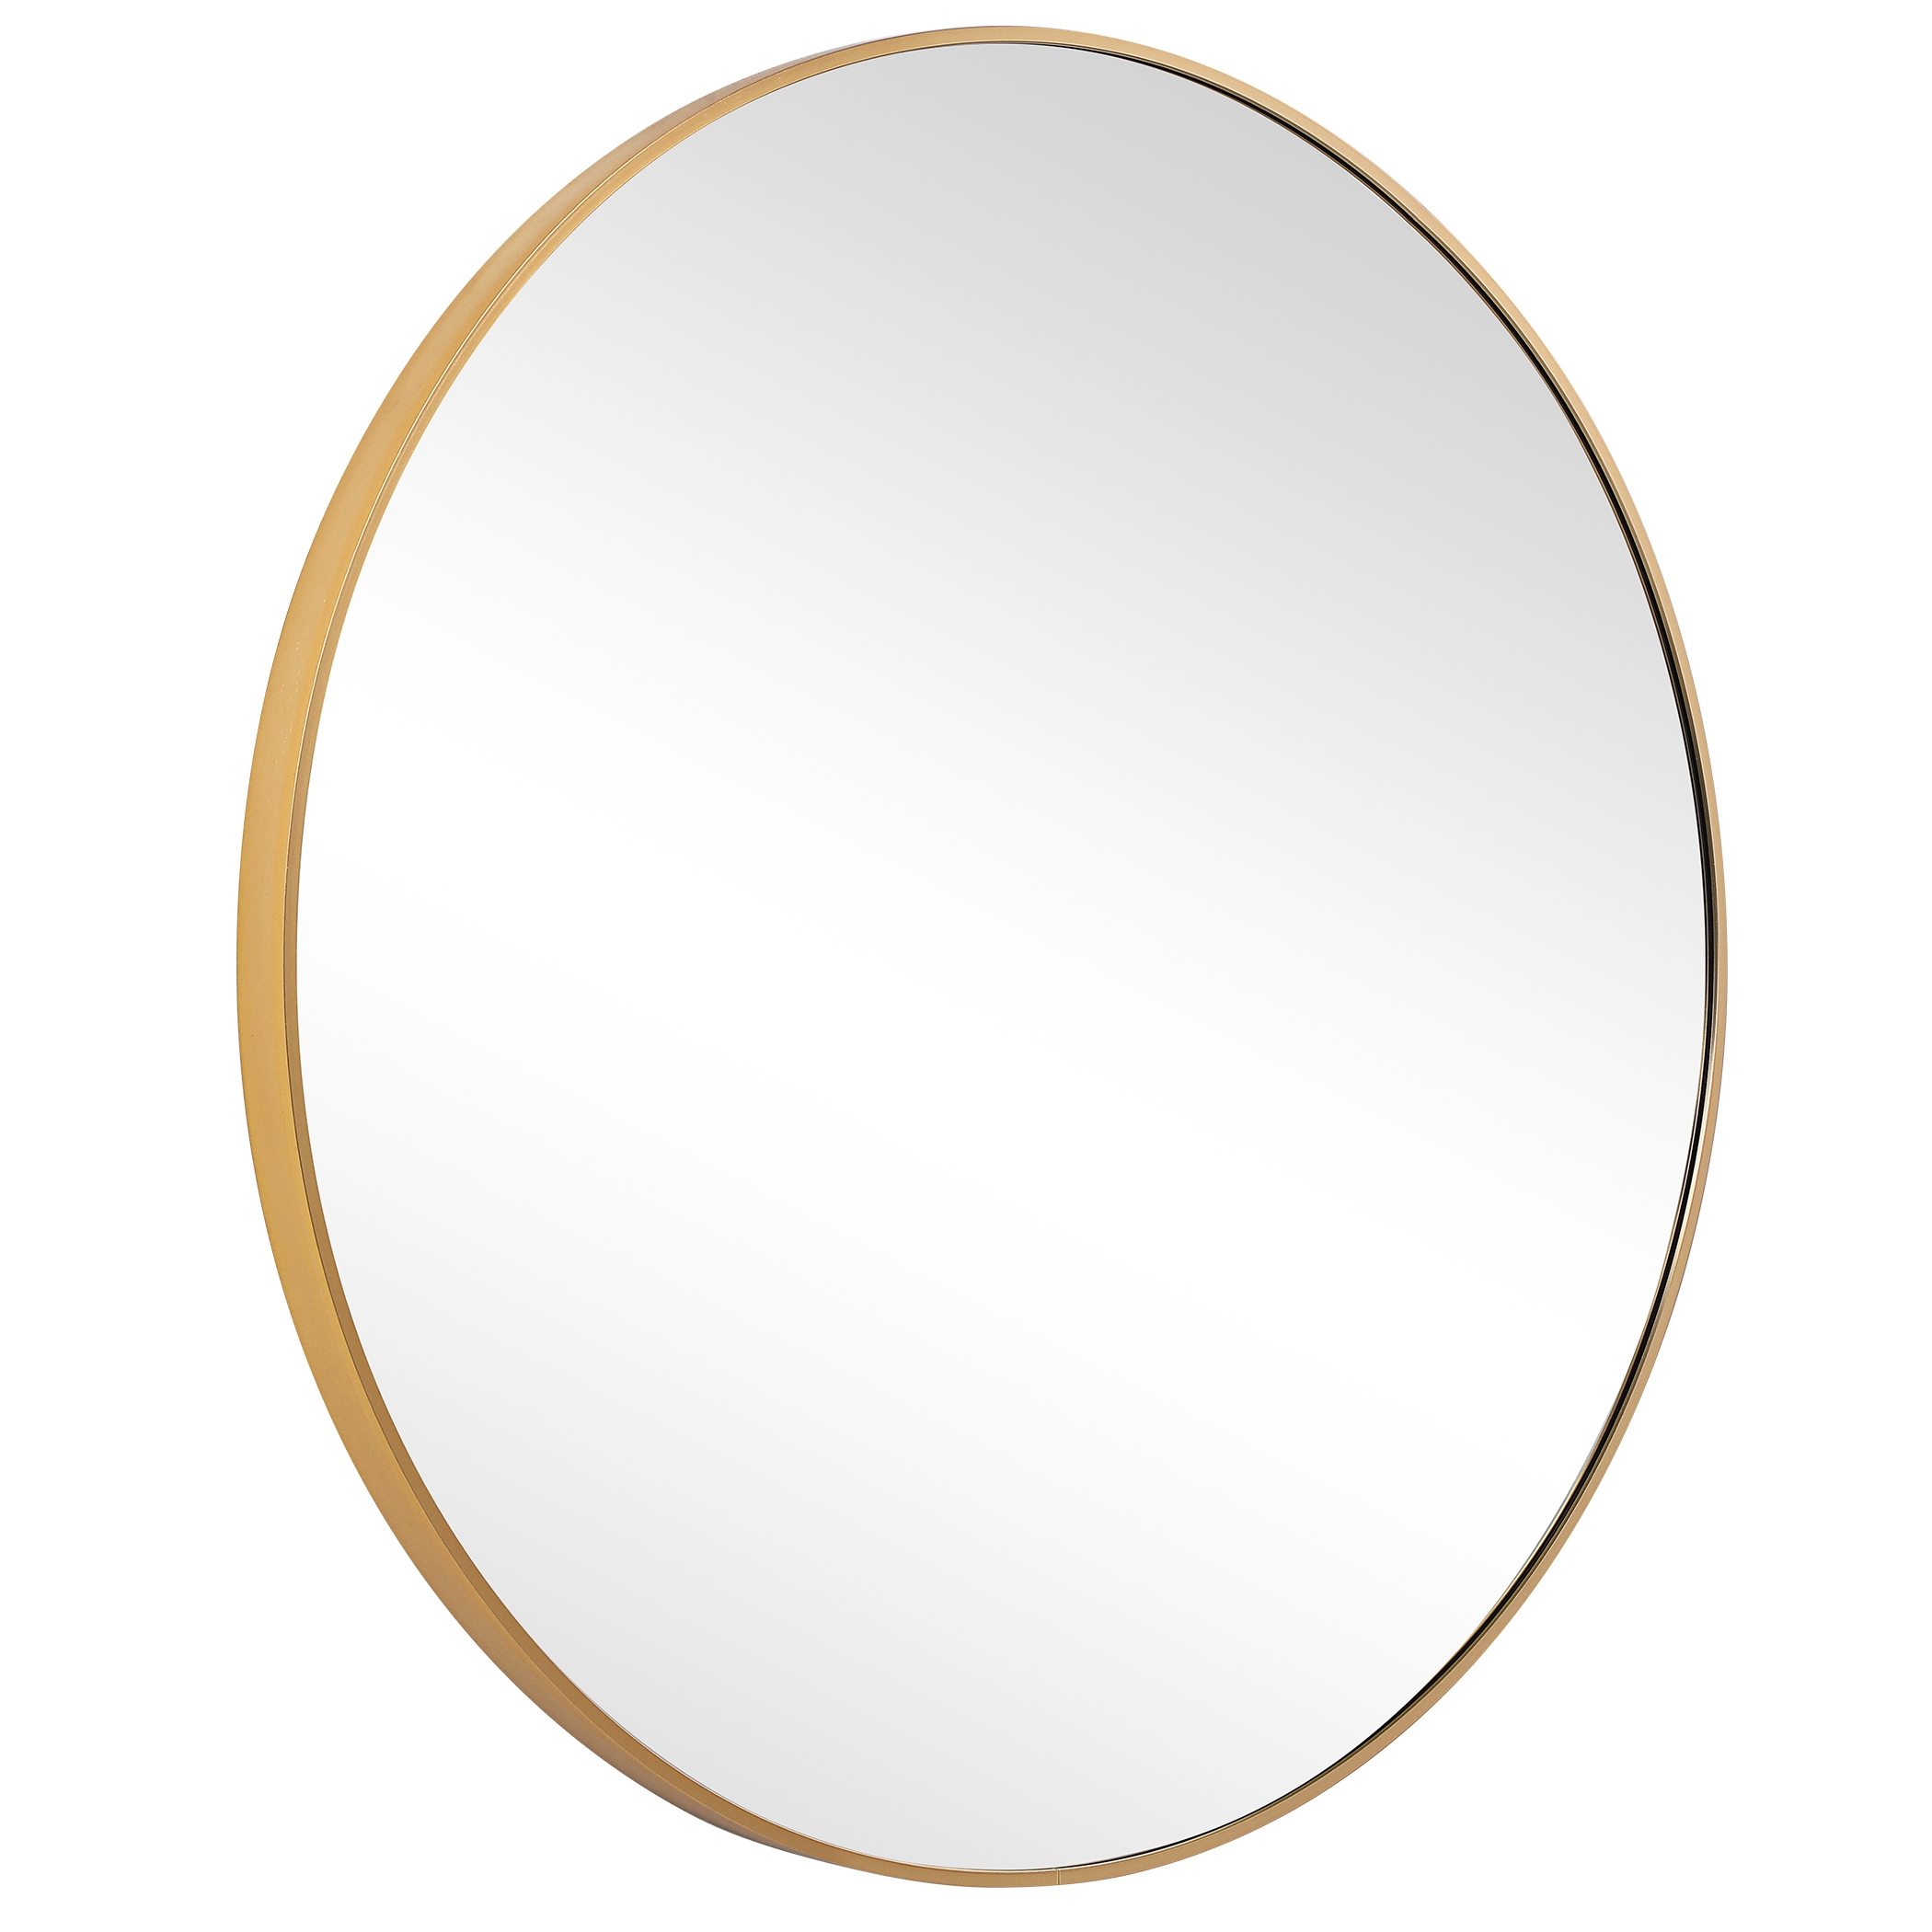 Norna Mirror, Gold, 34" - Image 1